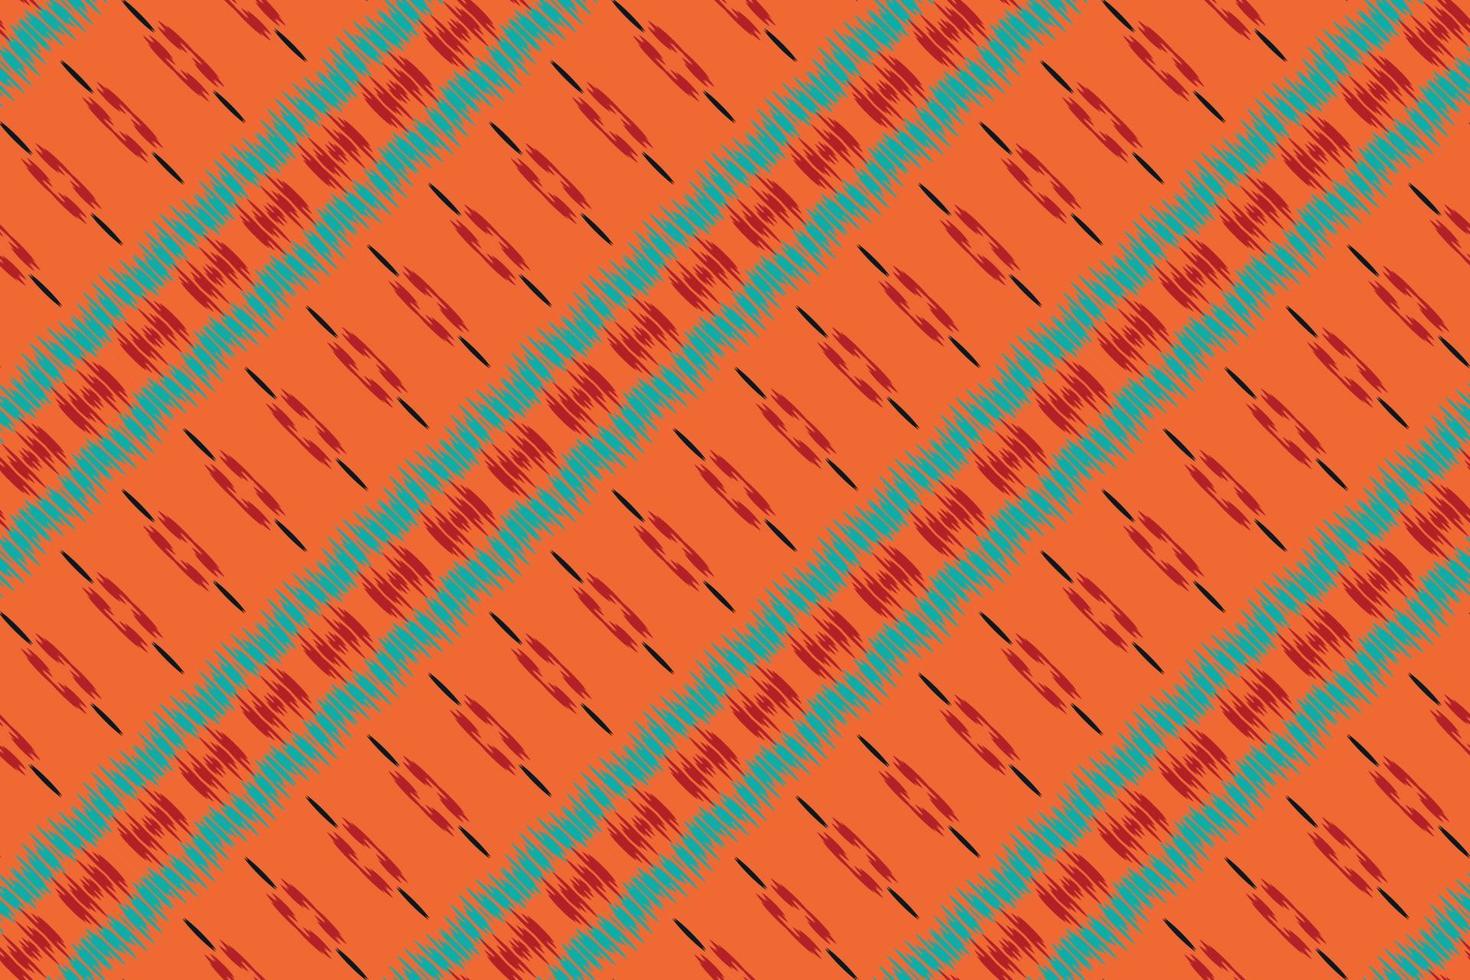 ikat puntos tribal azteca de patrones sin fisuras. étnico geométrico ikkat batik vector digital diseño textil para estampados tela sari mughal cepillo símbolo franjas textura kurti kurtis kurtas